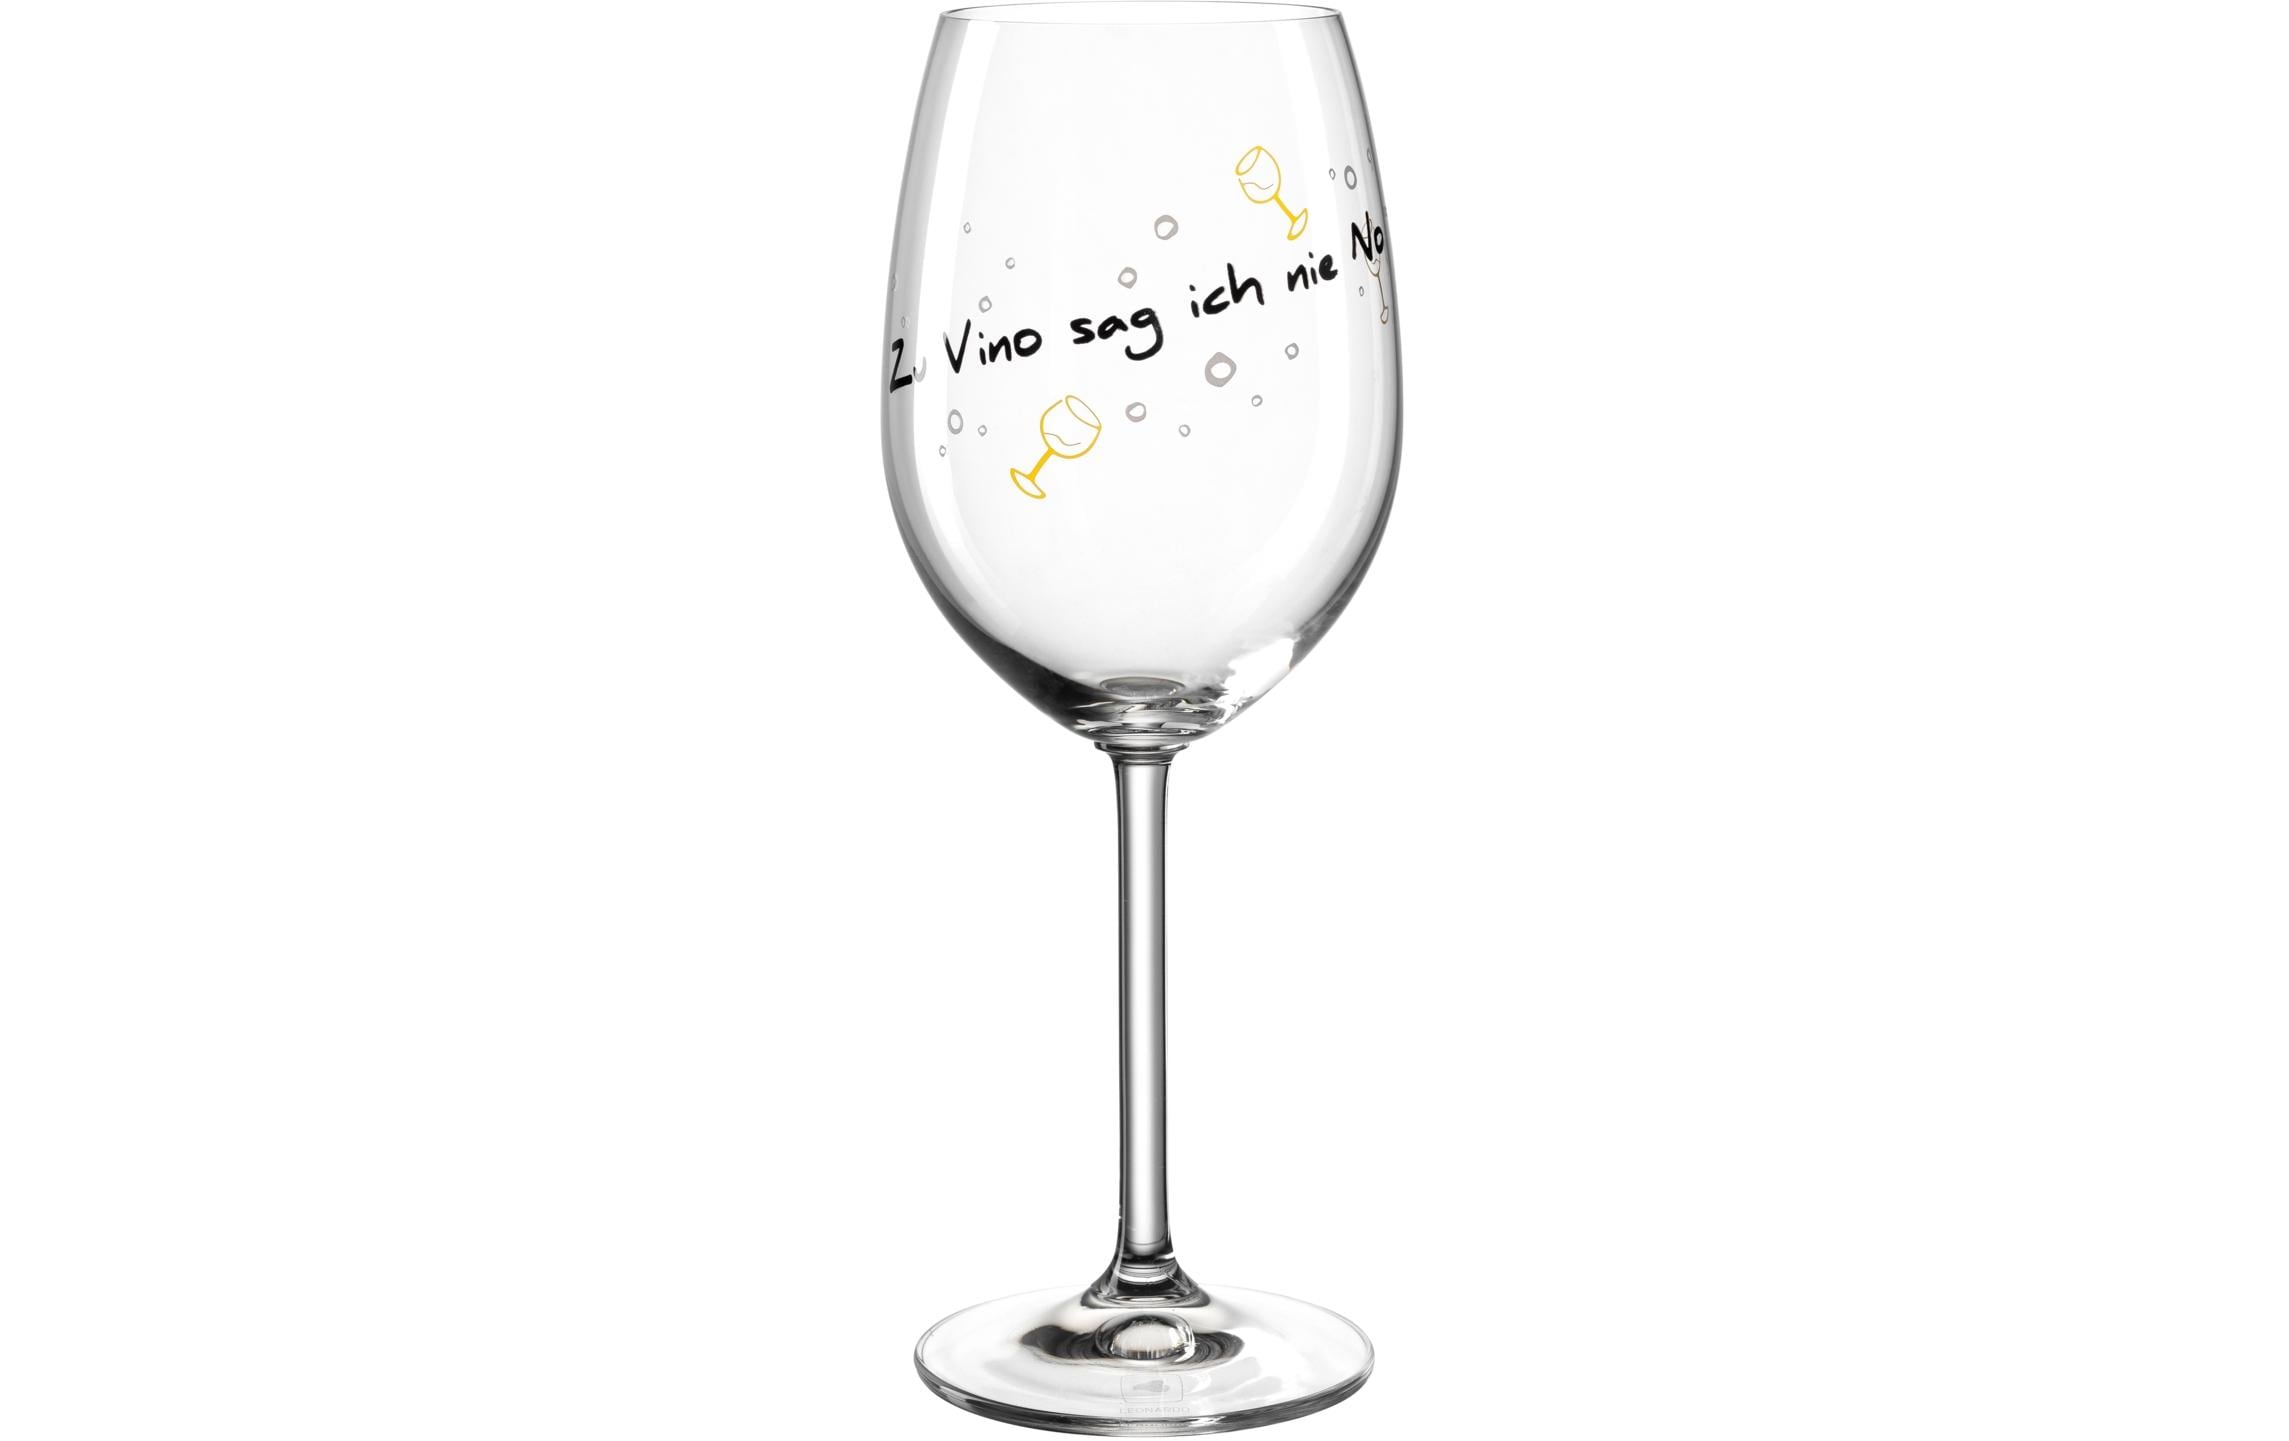 Leonardo Rotweinglas Presente «Zu Vino sag ich nie No» 460 ml